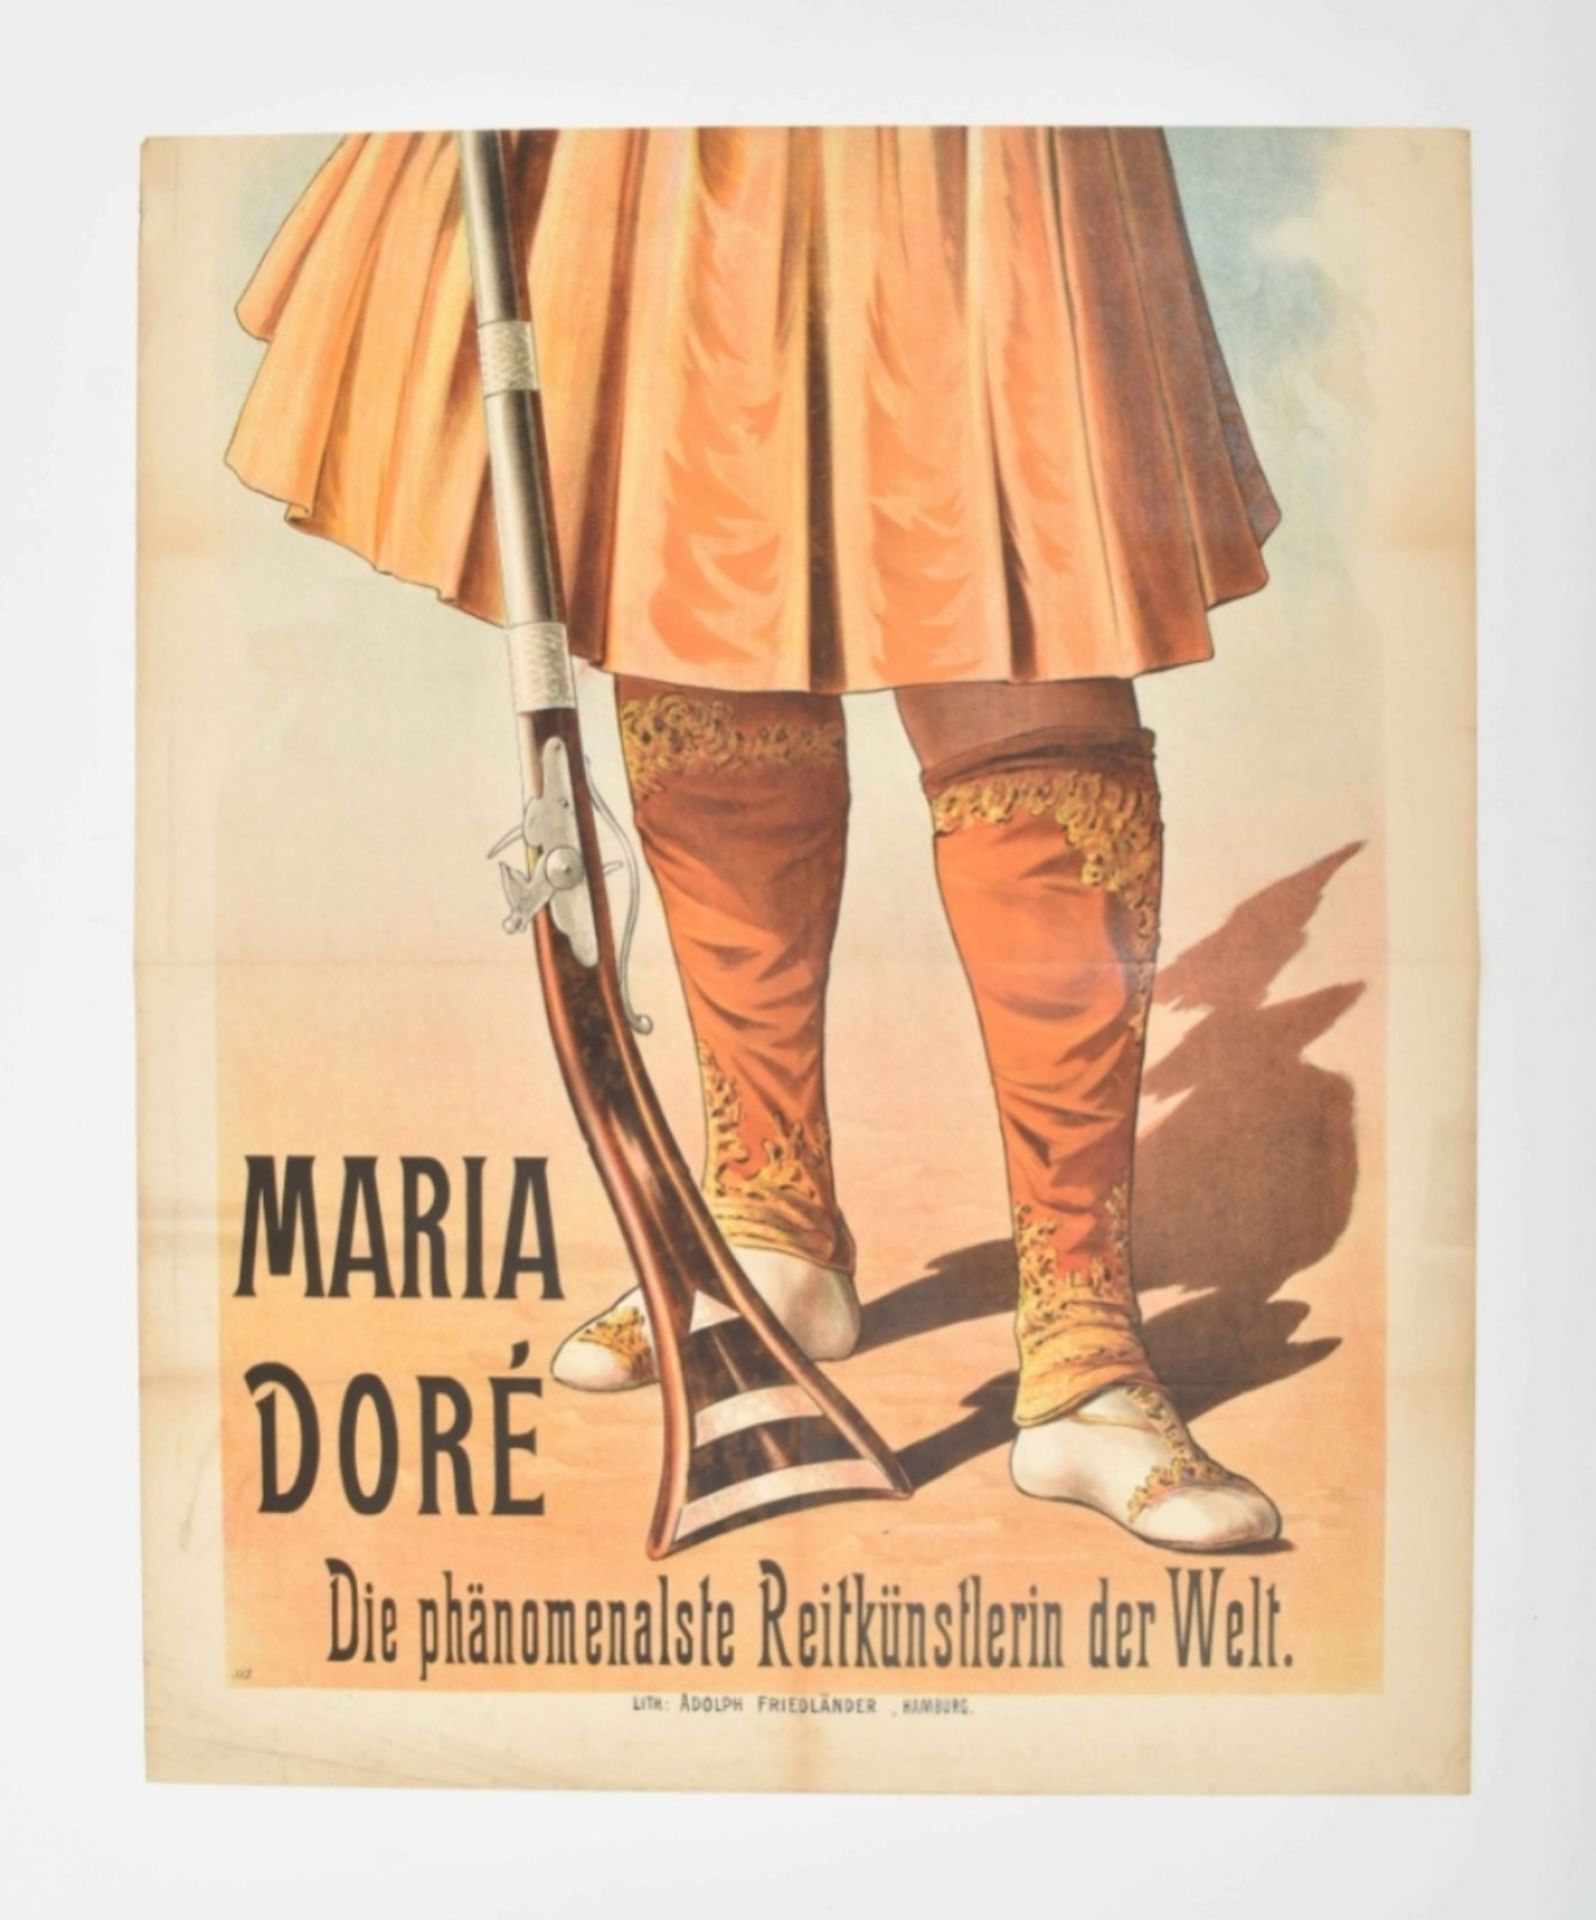 [Equestrian] Maria Doré, phänomenalste Reitkünstlerin der Welt - Image 5 of 9